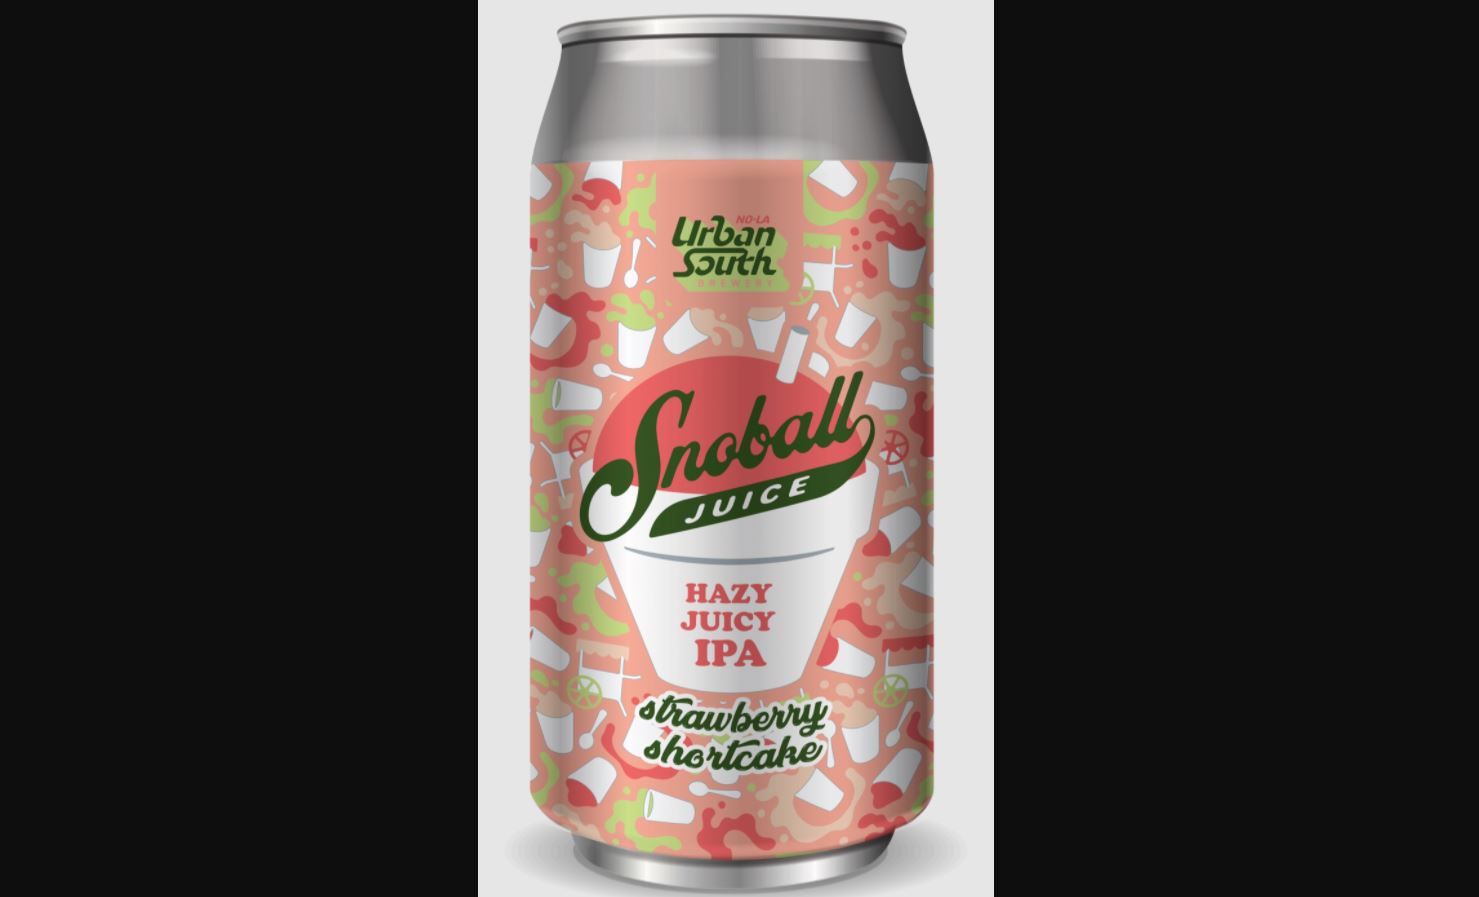 Urban South Strawberry Shortcake Snoball Juice